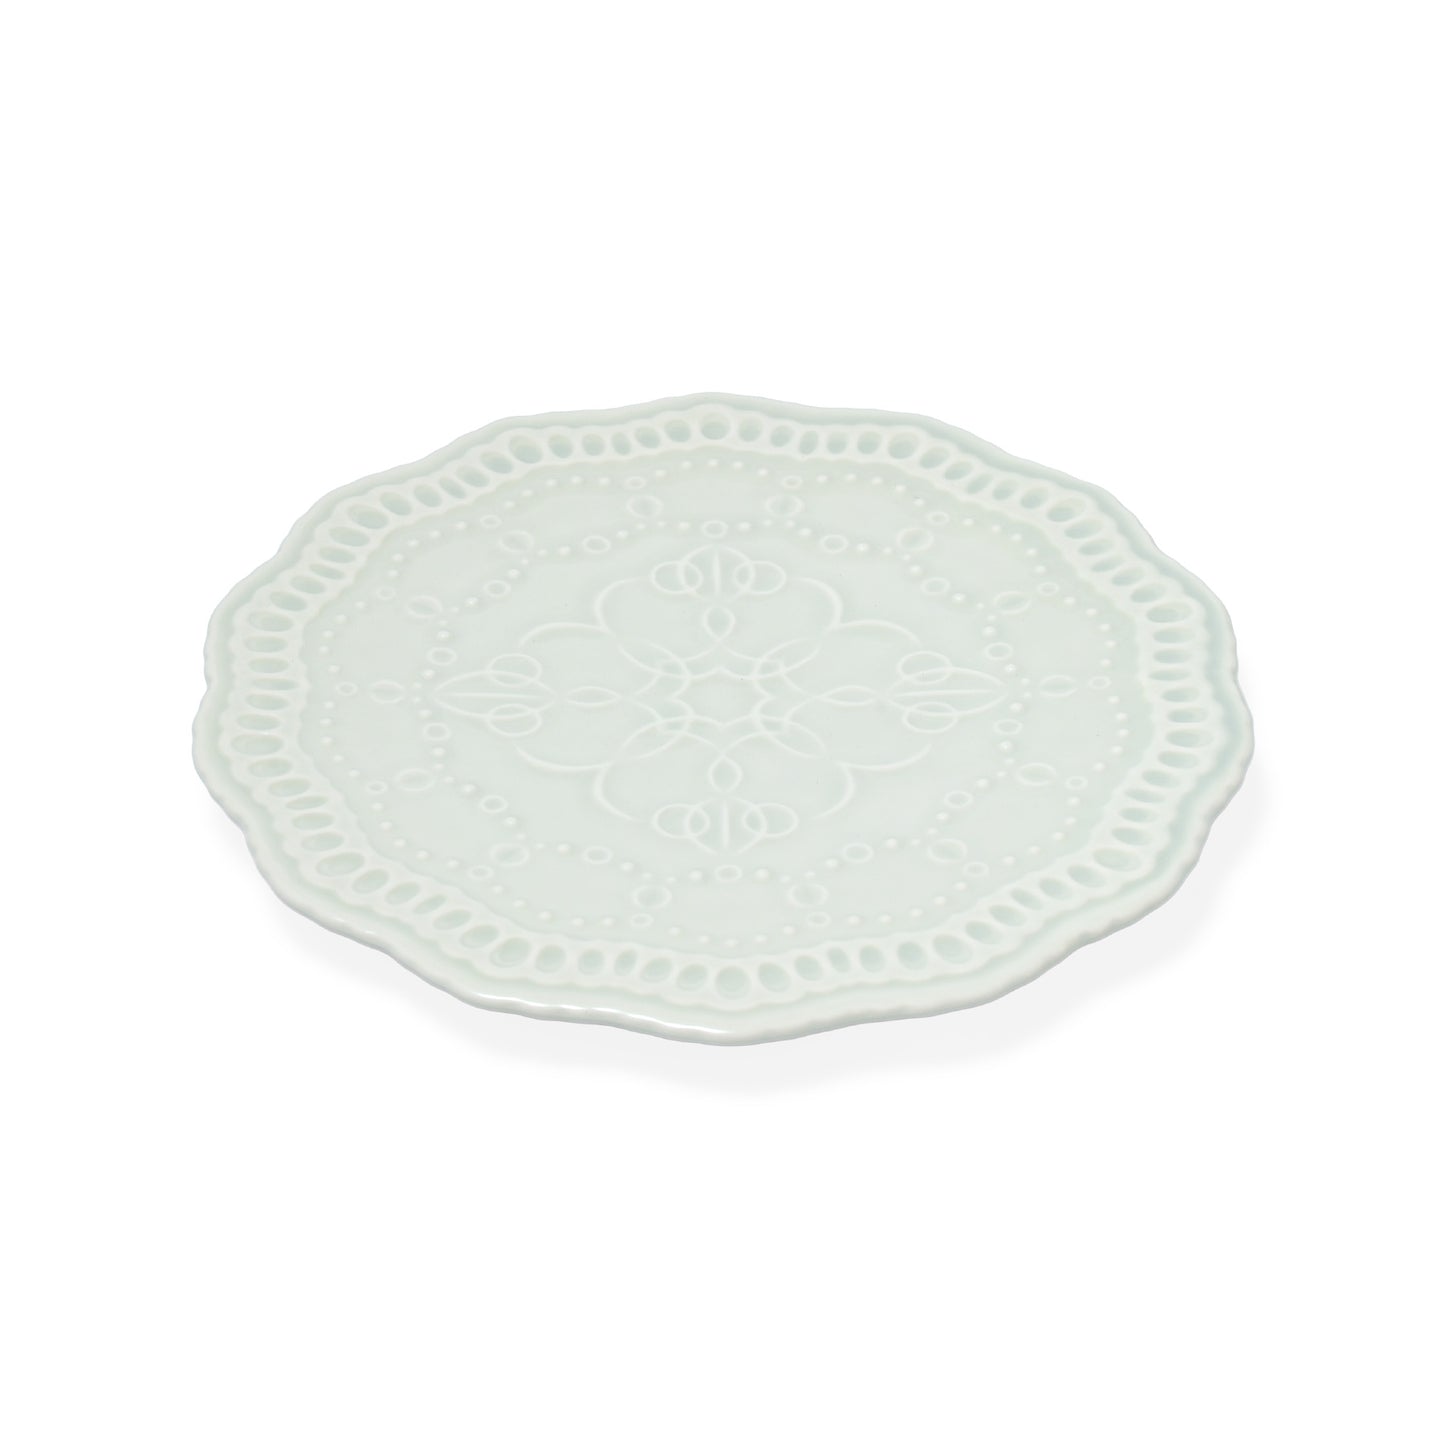 Etinceler Dessert Plate / Table Decor